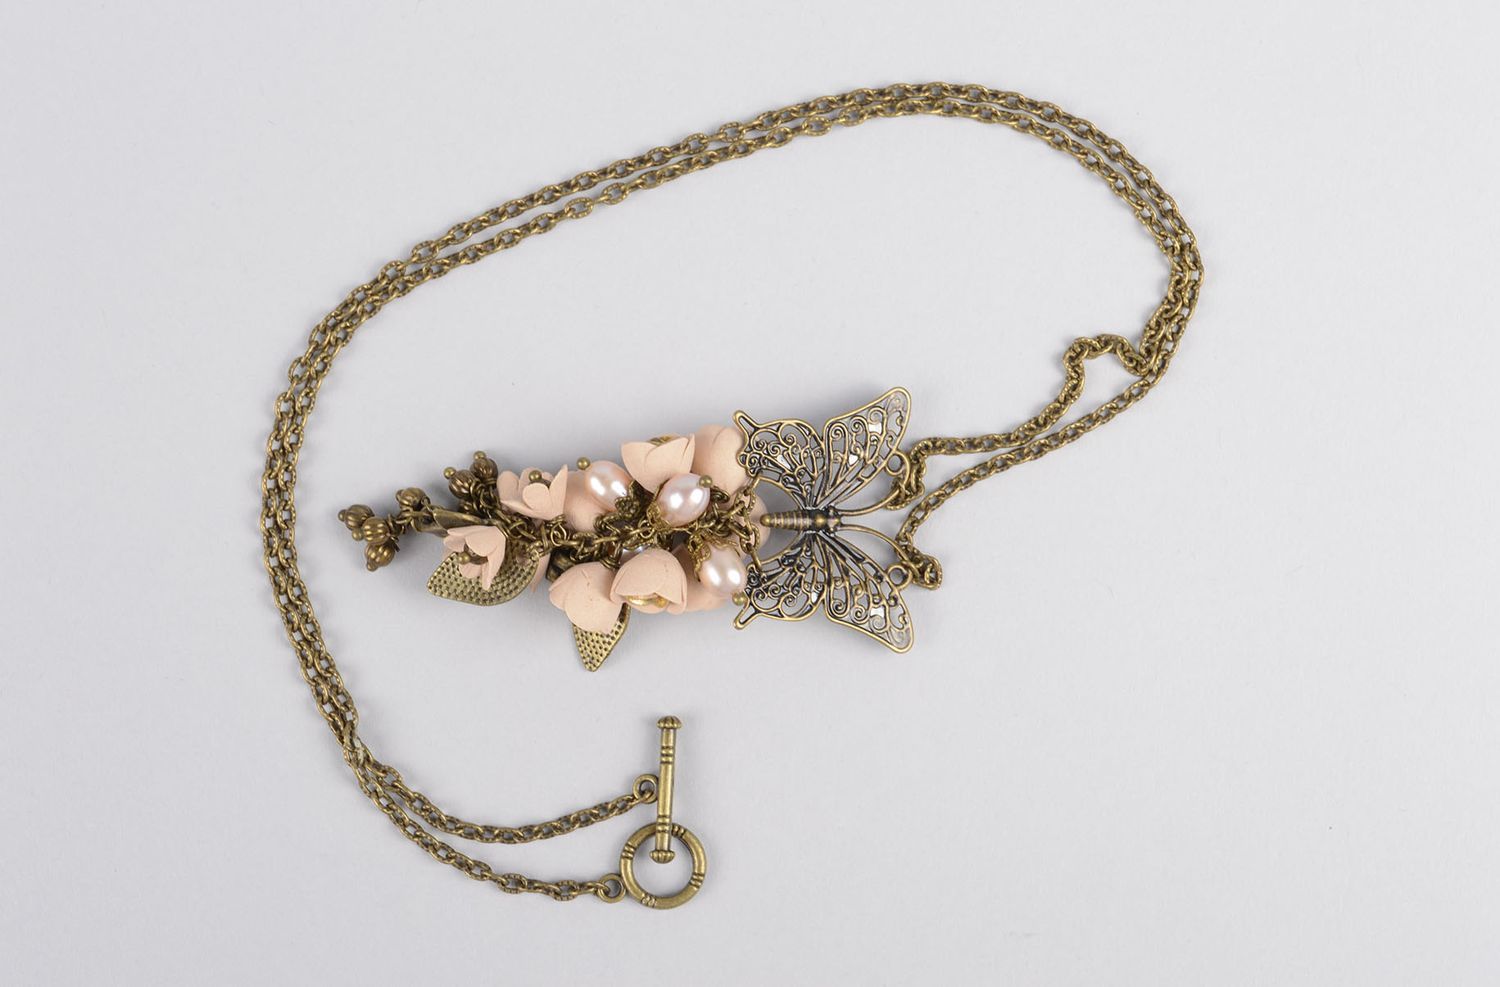 Handmade pendant unusual accessory gift idea clay pendant for women clay jewelry photo 2